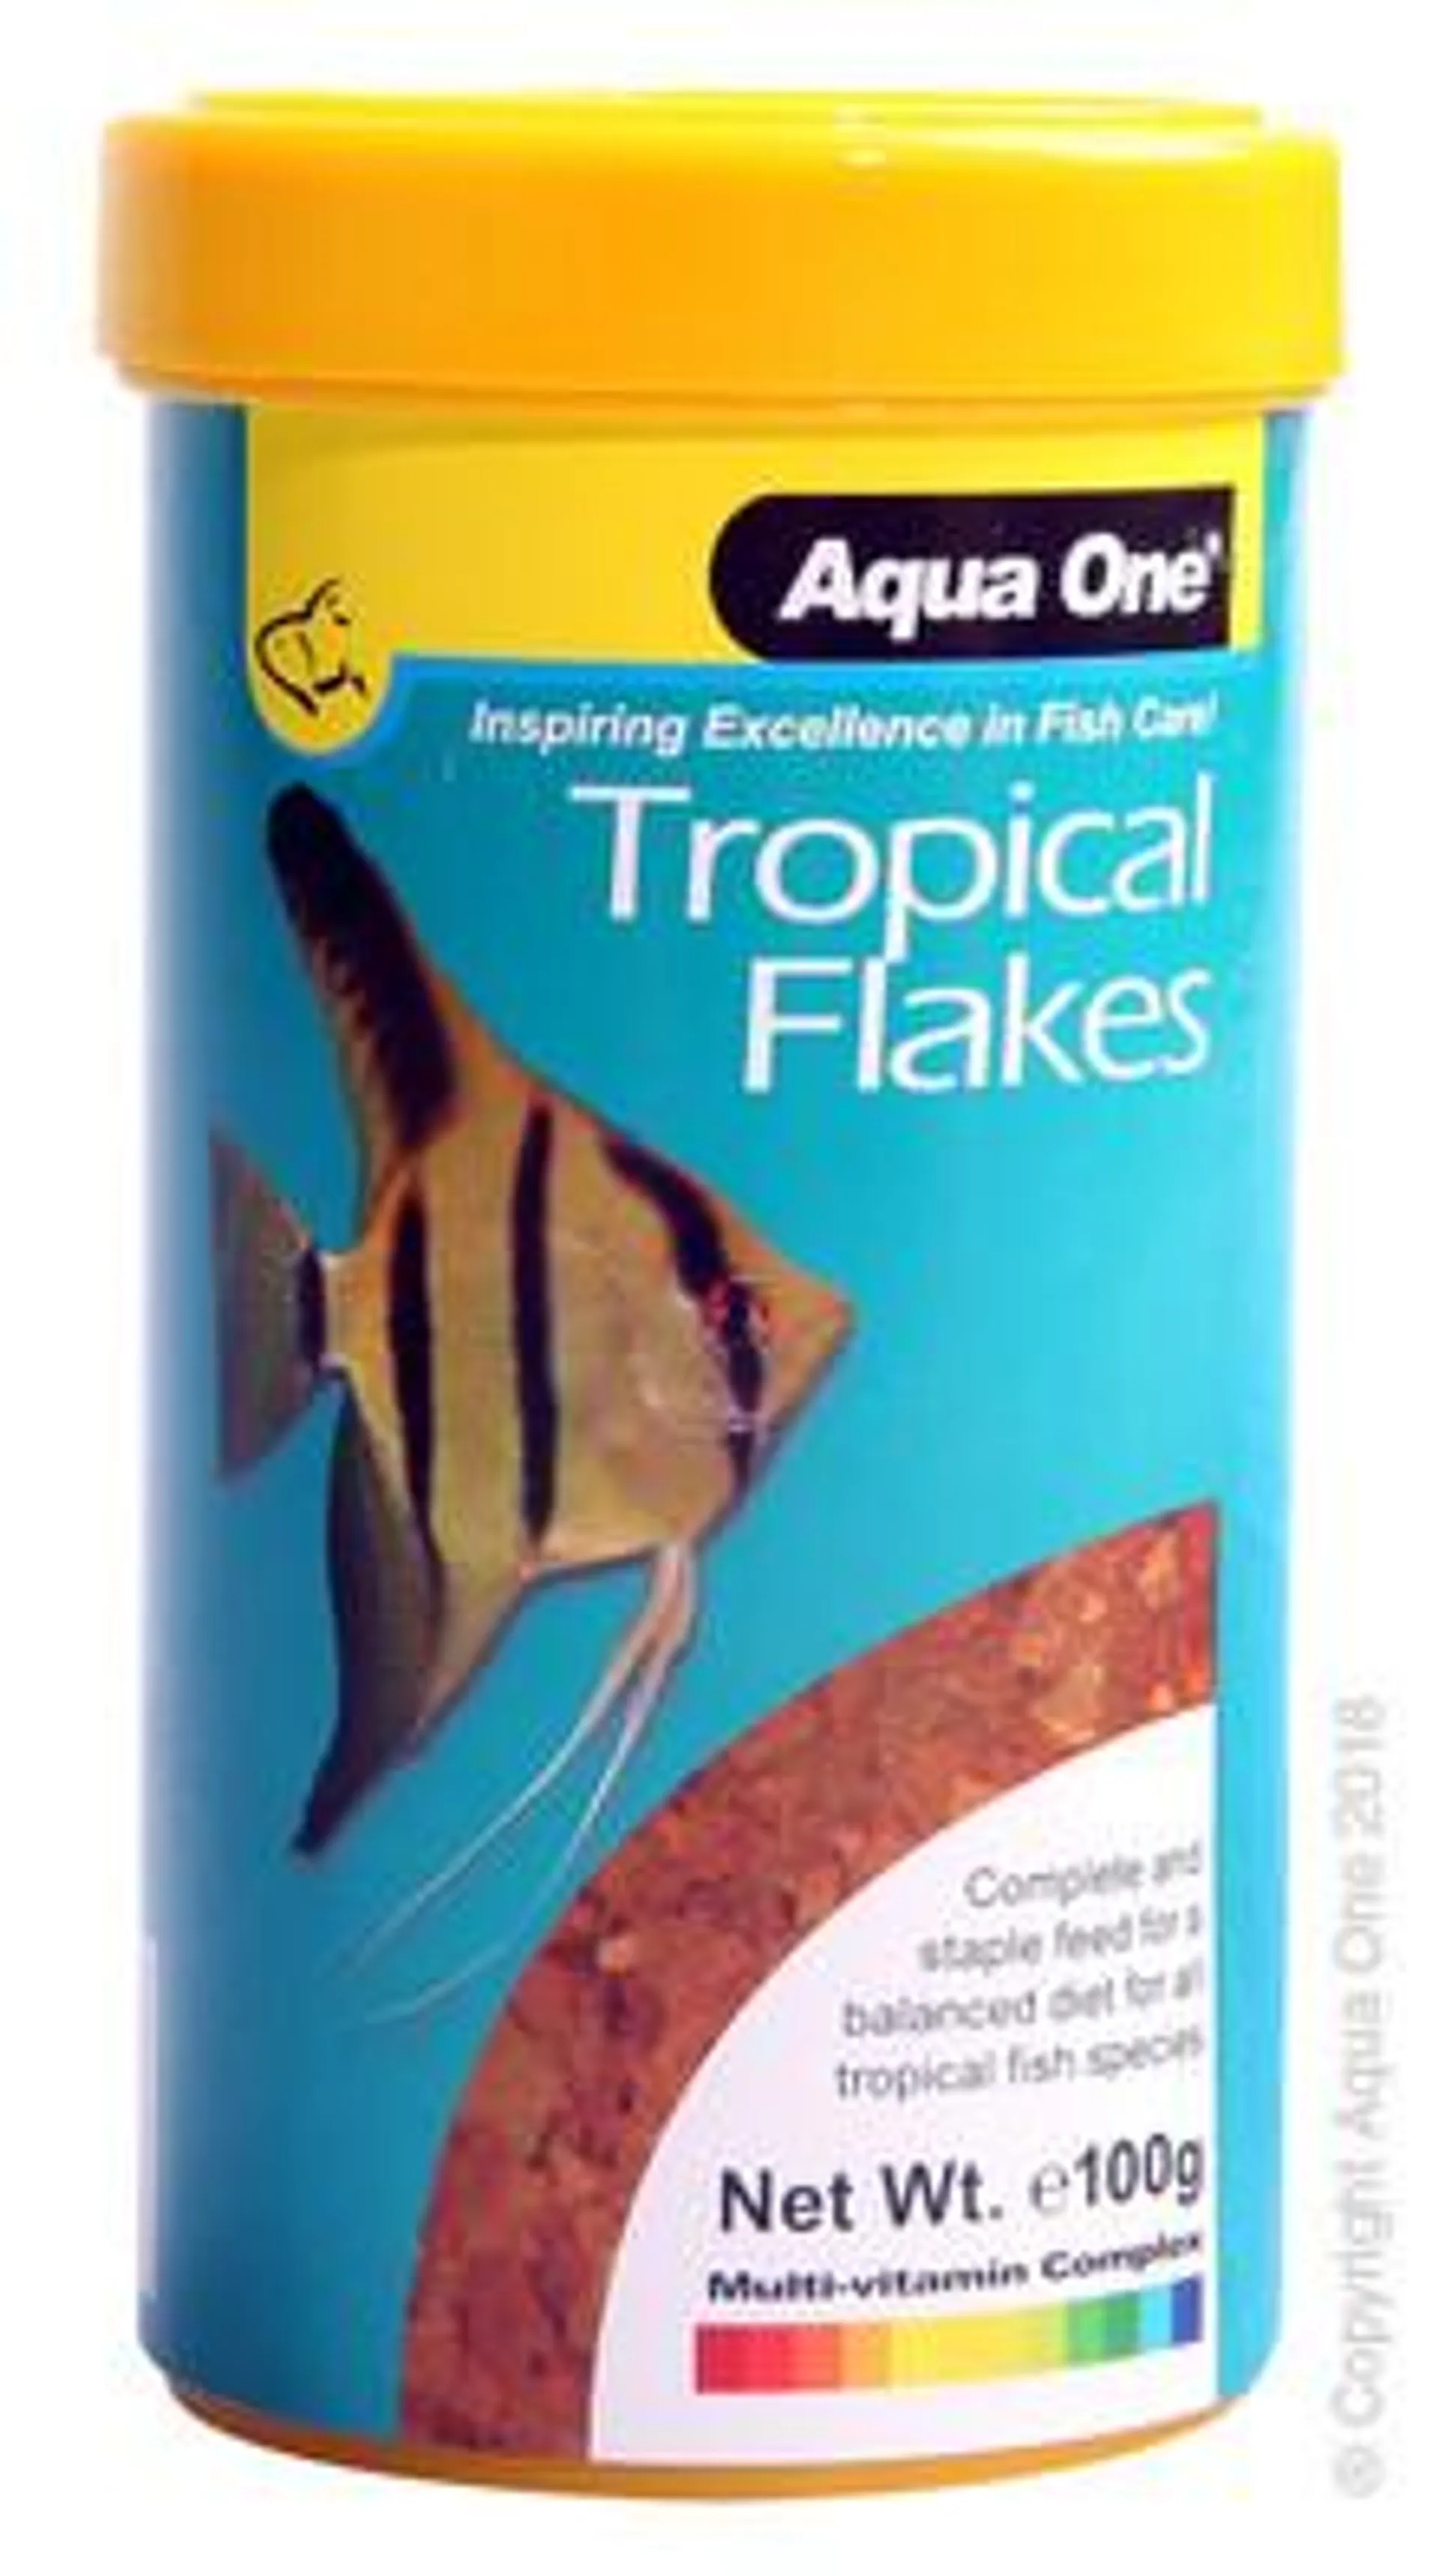 Aqua One Tropical Flake Fish Food